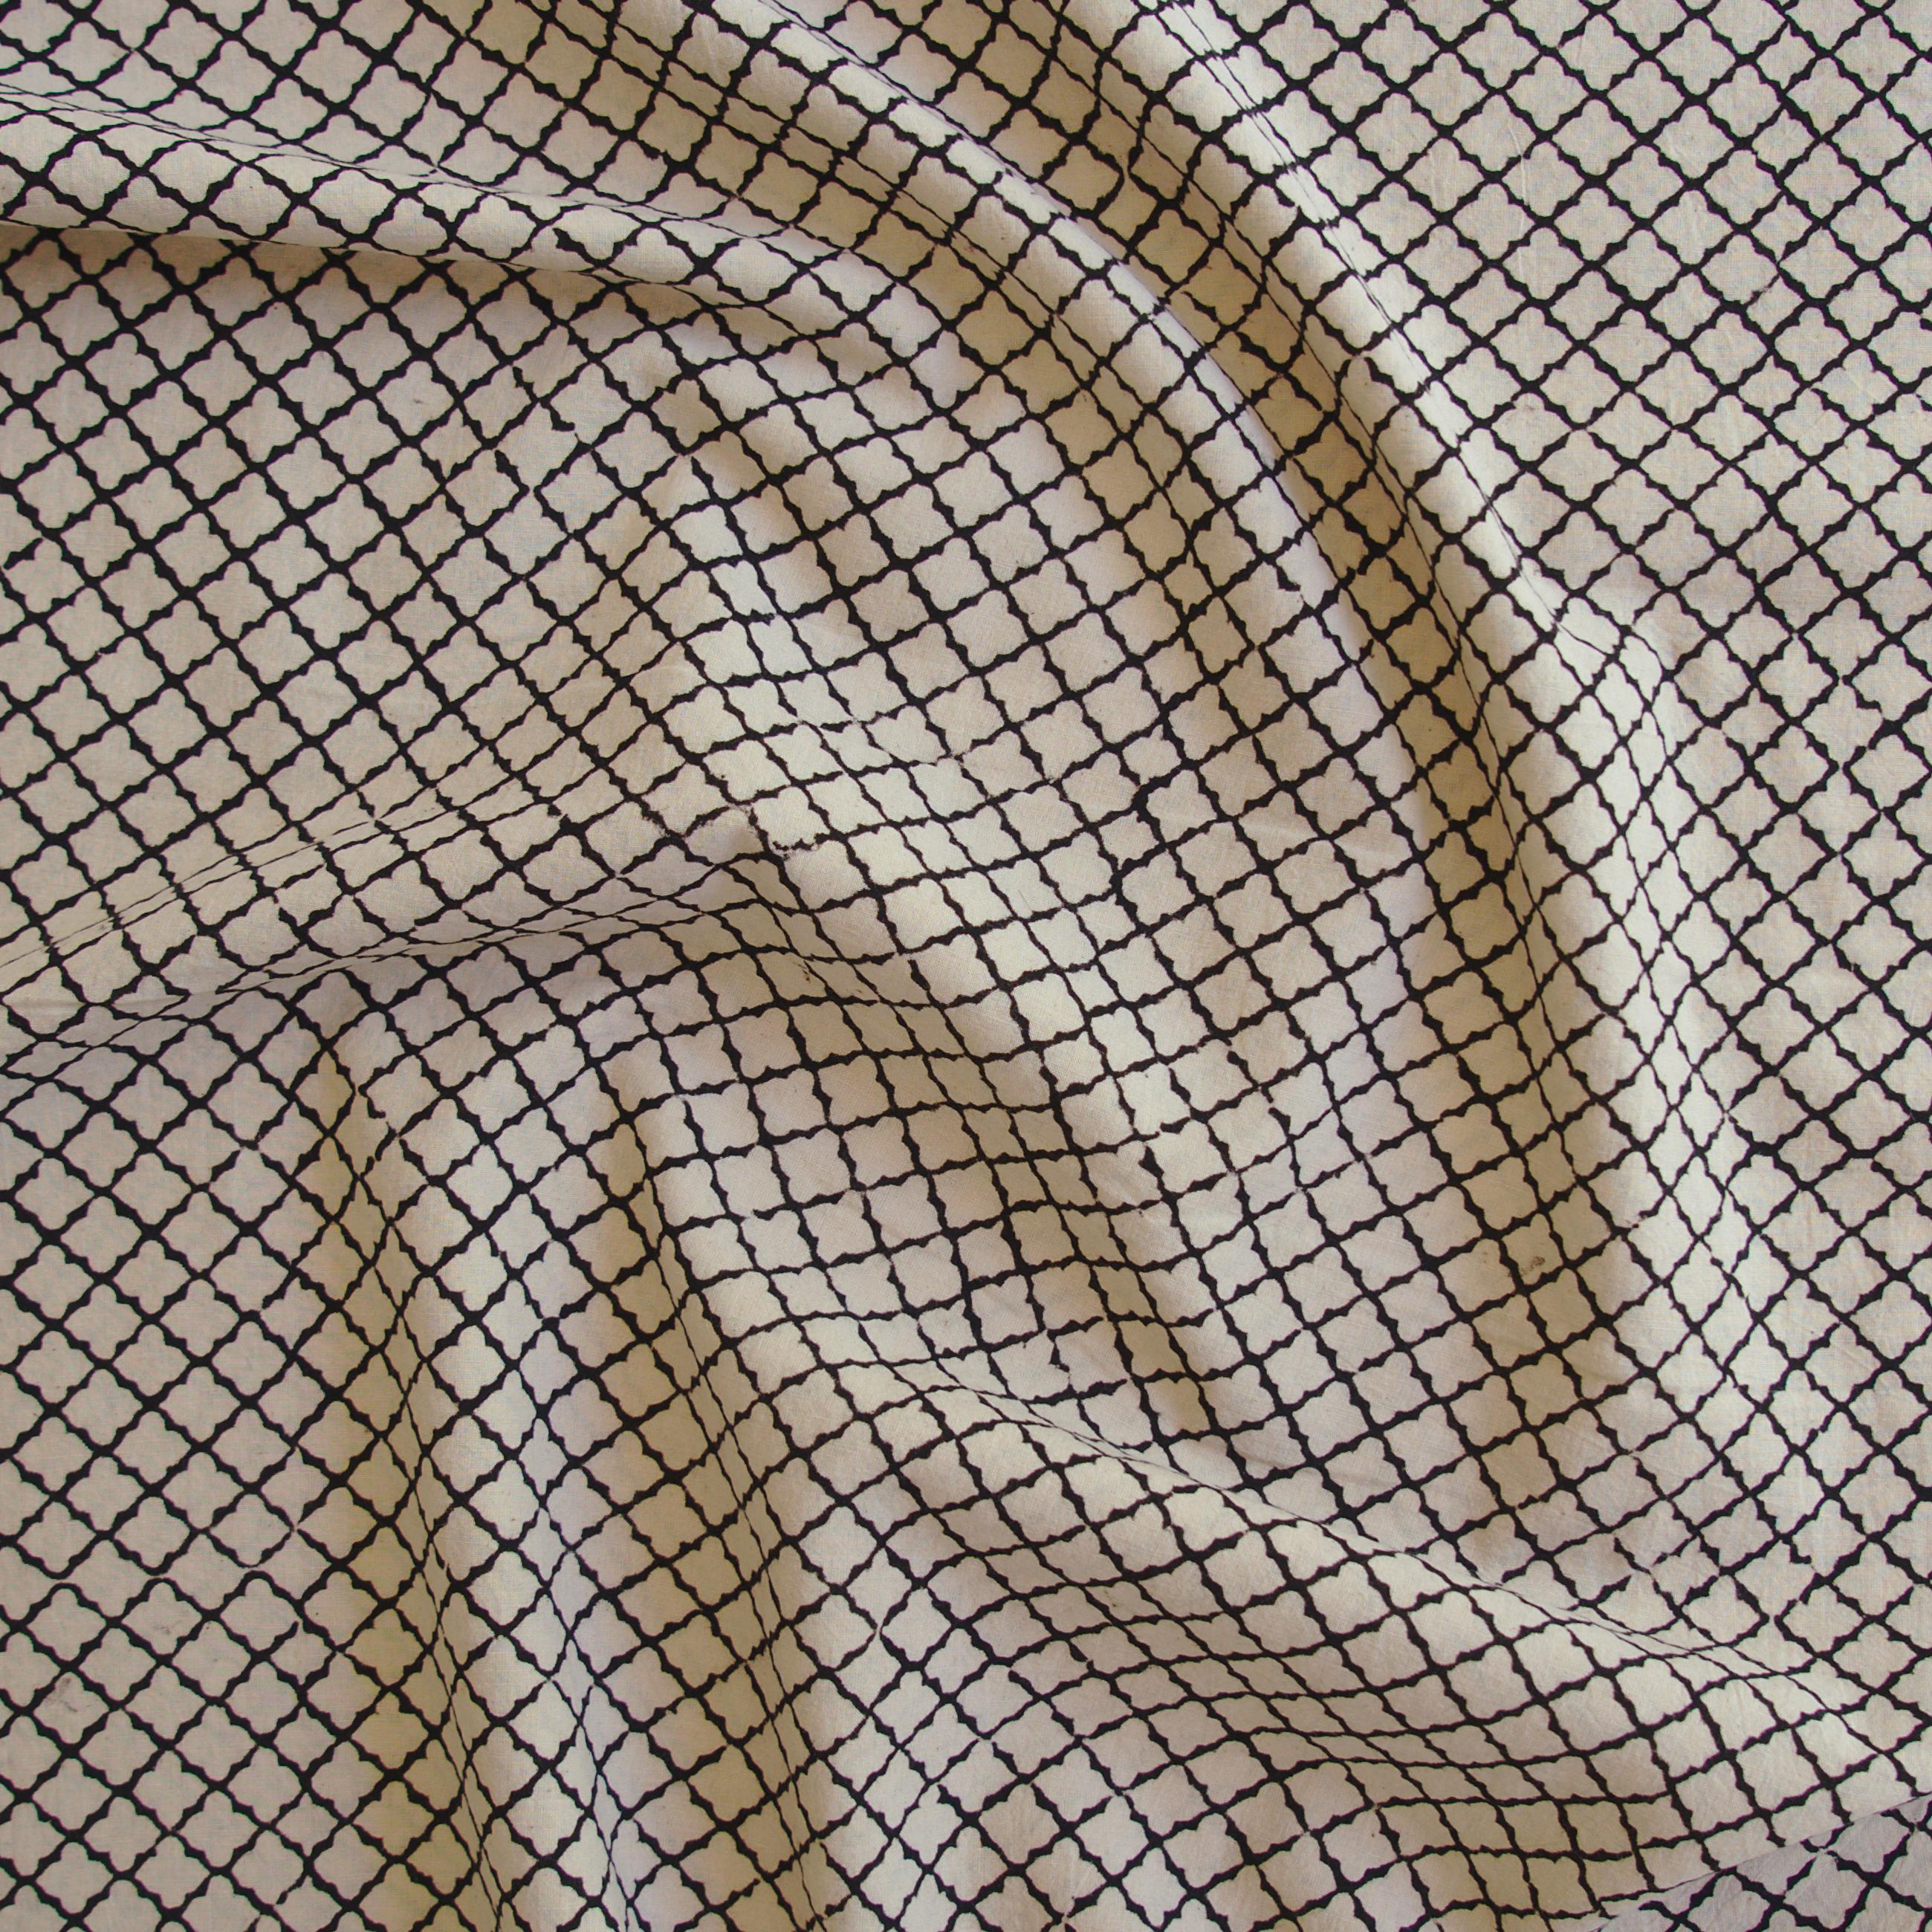 Block Printed Fabric, 100% Cotton, Ajrak Design: Beige Base, Iron Black Clover. Contrast